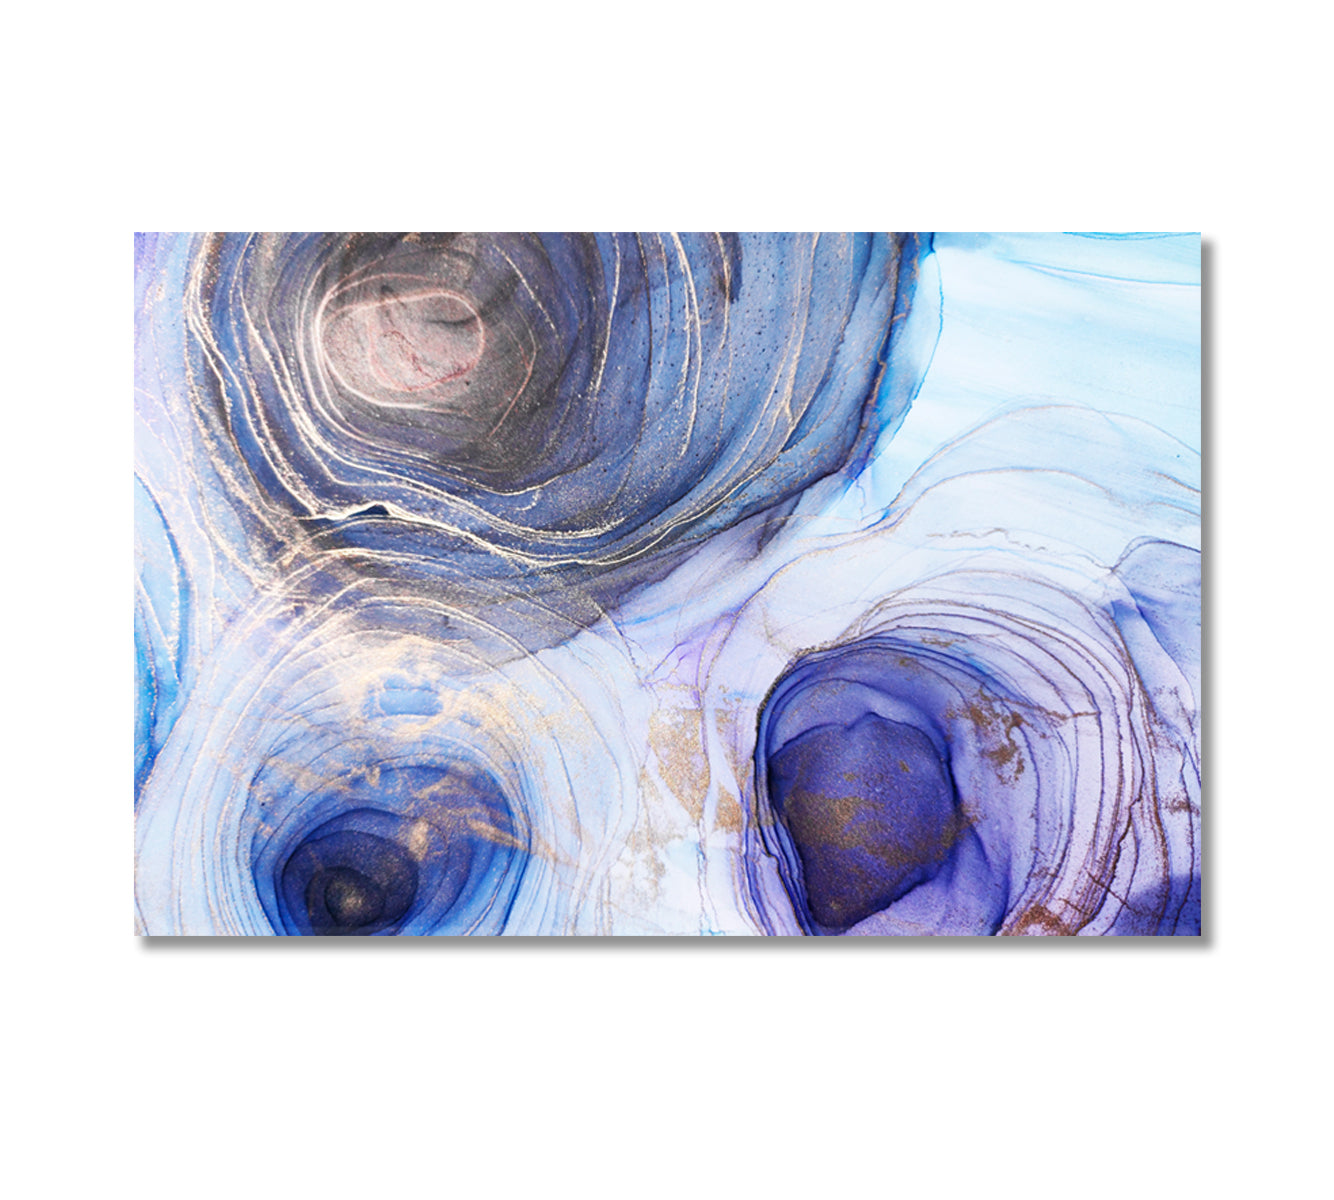 Stunning Abstract Blue Circles Canvas Print-Canvas Print-CetArt-1 Panel-24x16 inches-CetArt